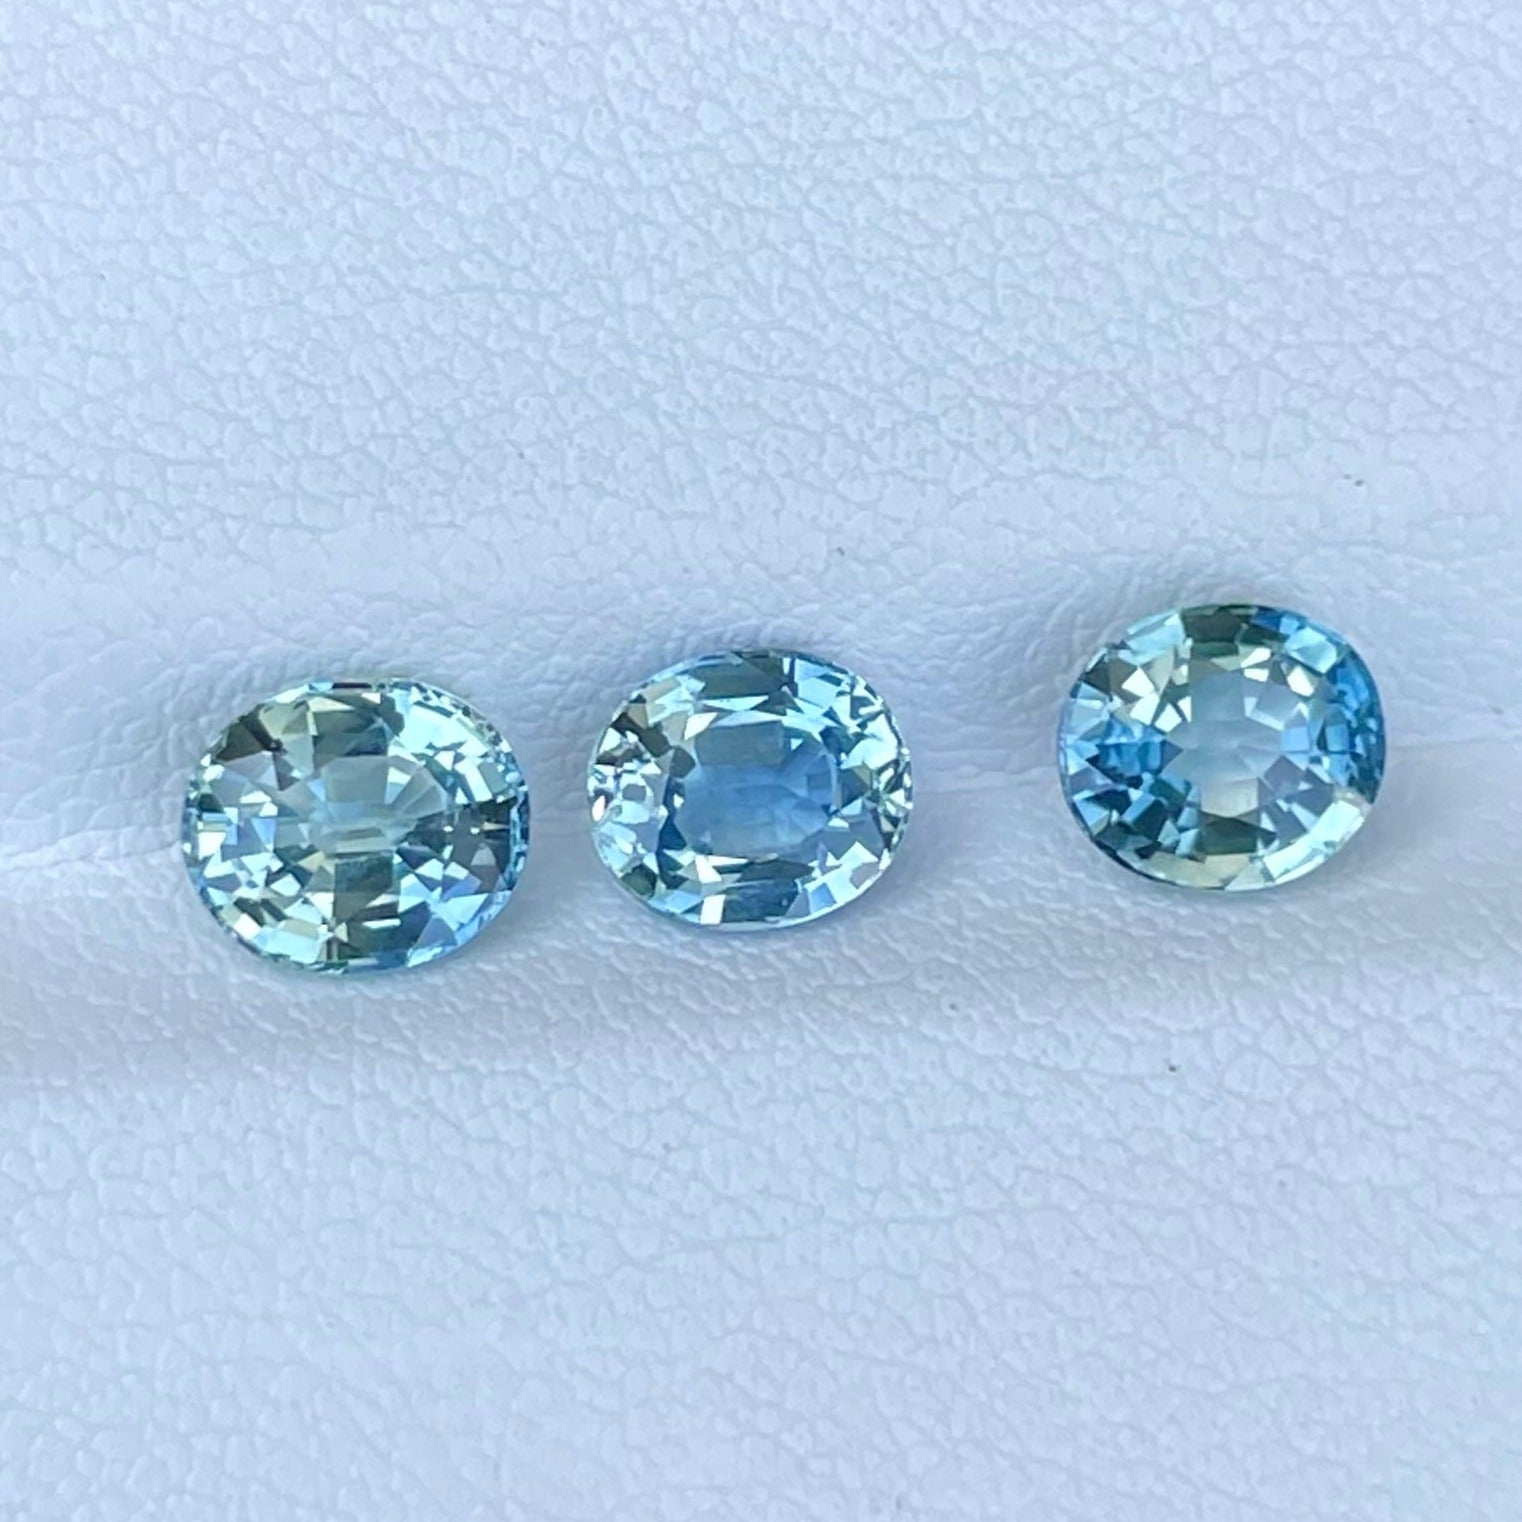 3.55 carats Blue Oval Sapphire Gemstones